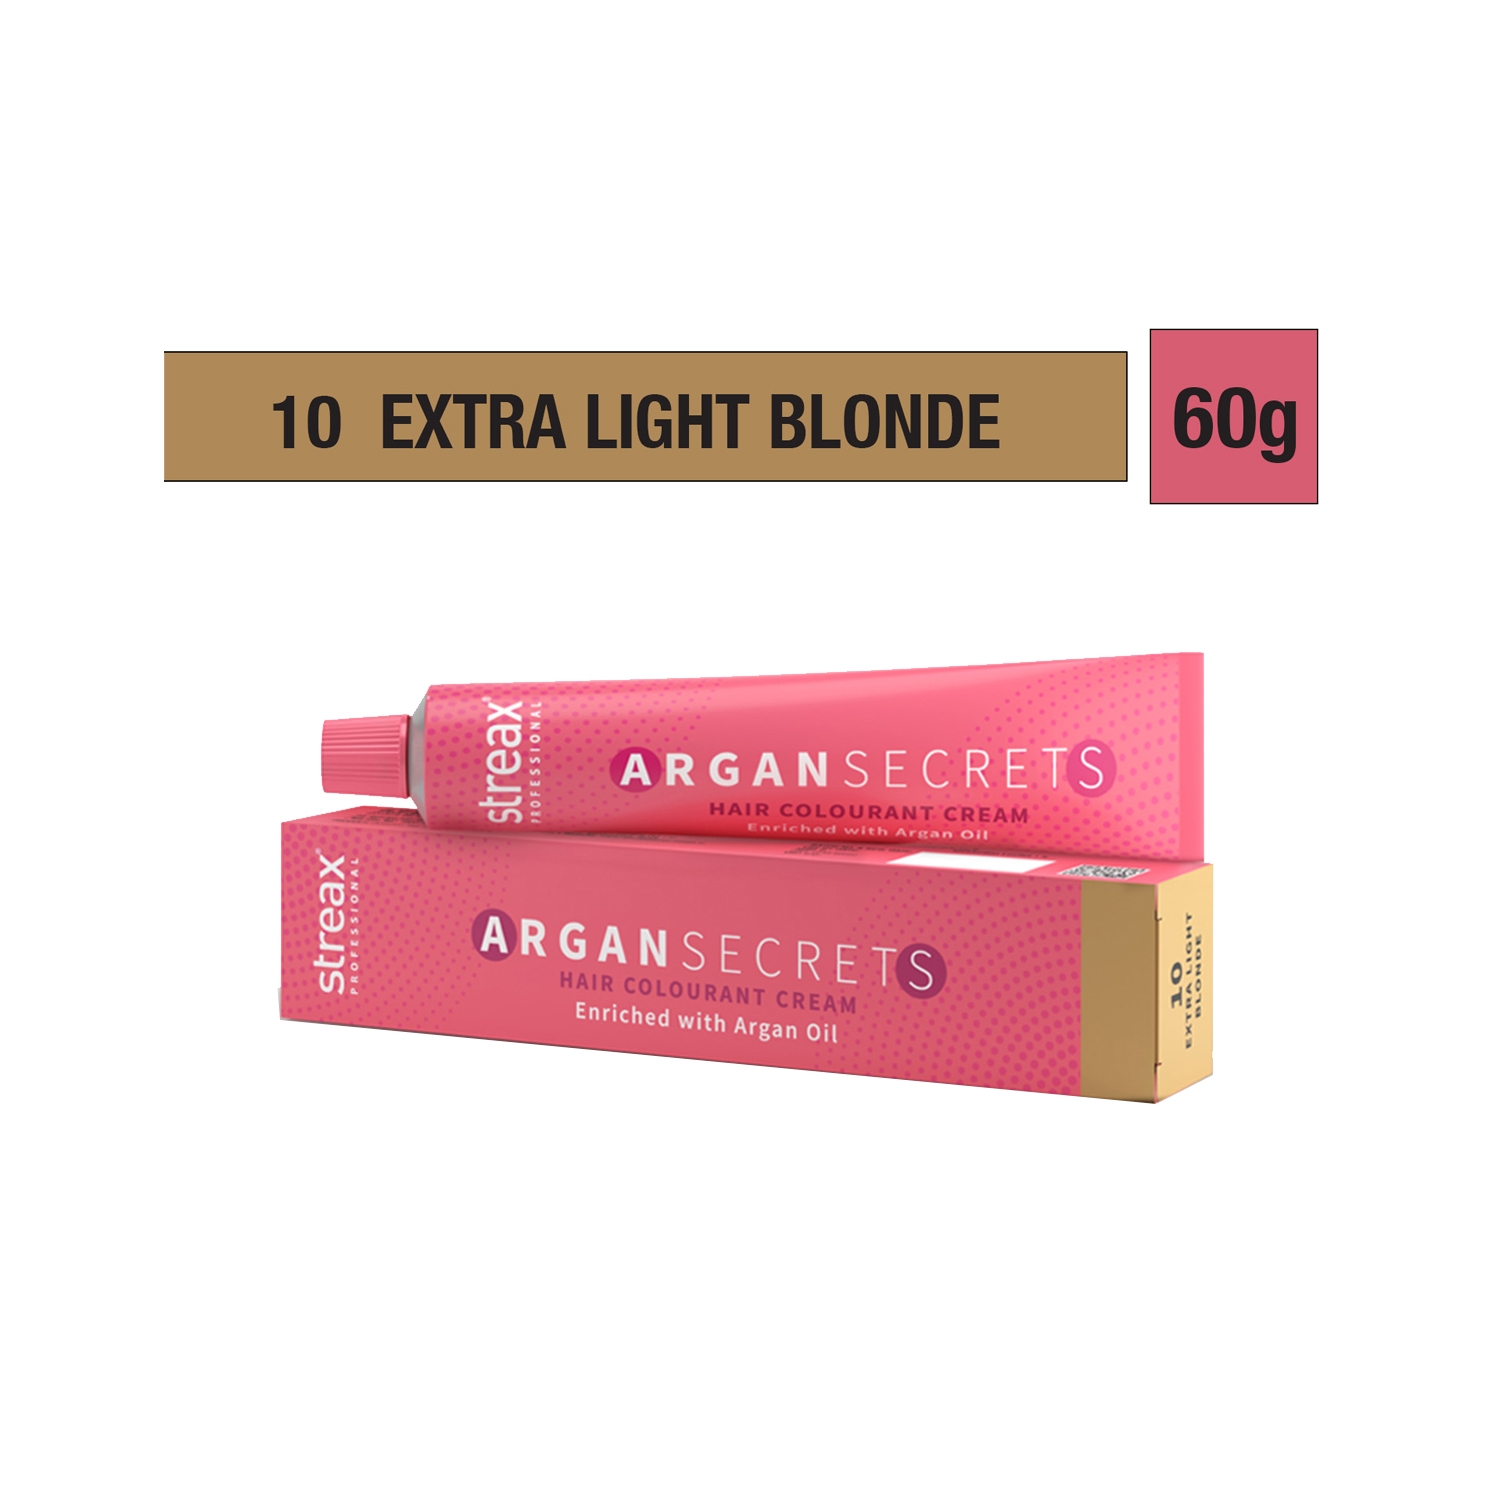 Streax Professional Argan Secrets Hair Colorant Cream - 10 Extra Light Blonde (60g)